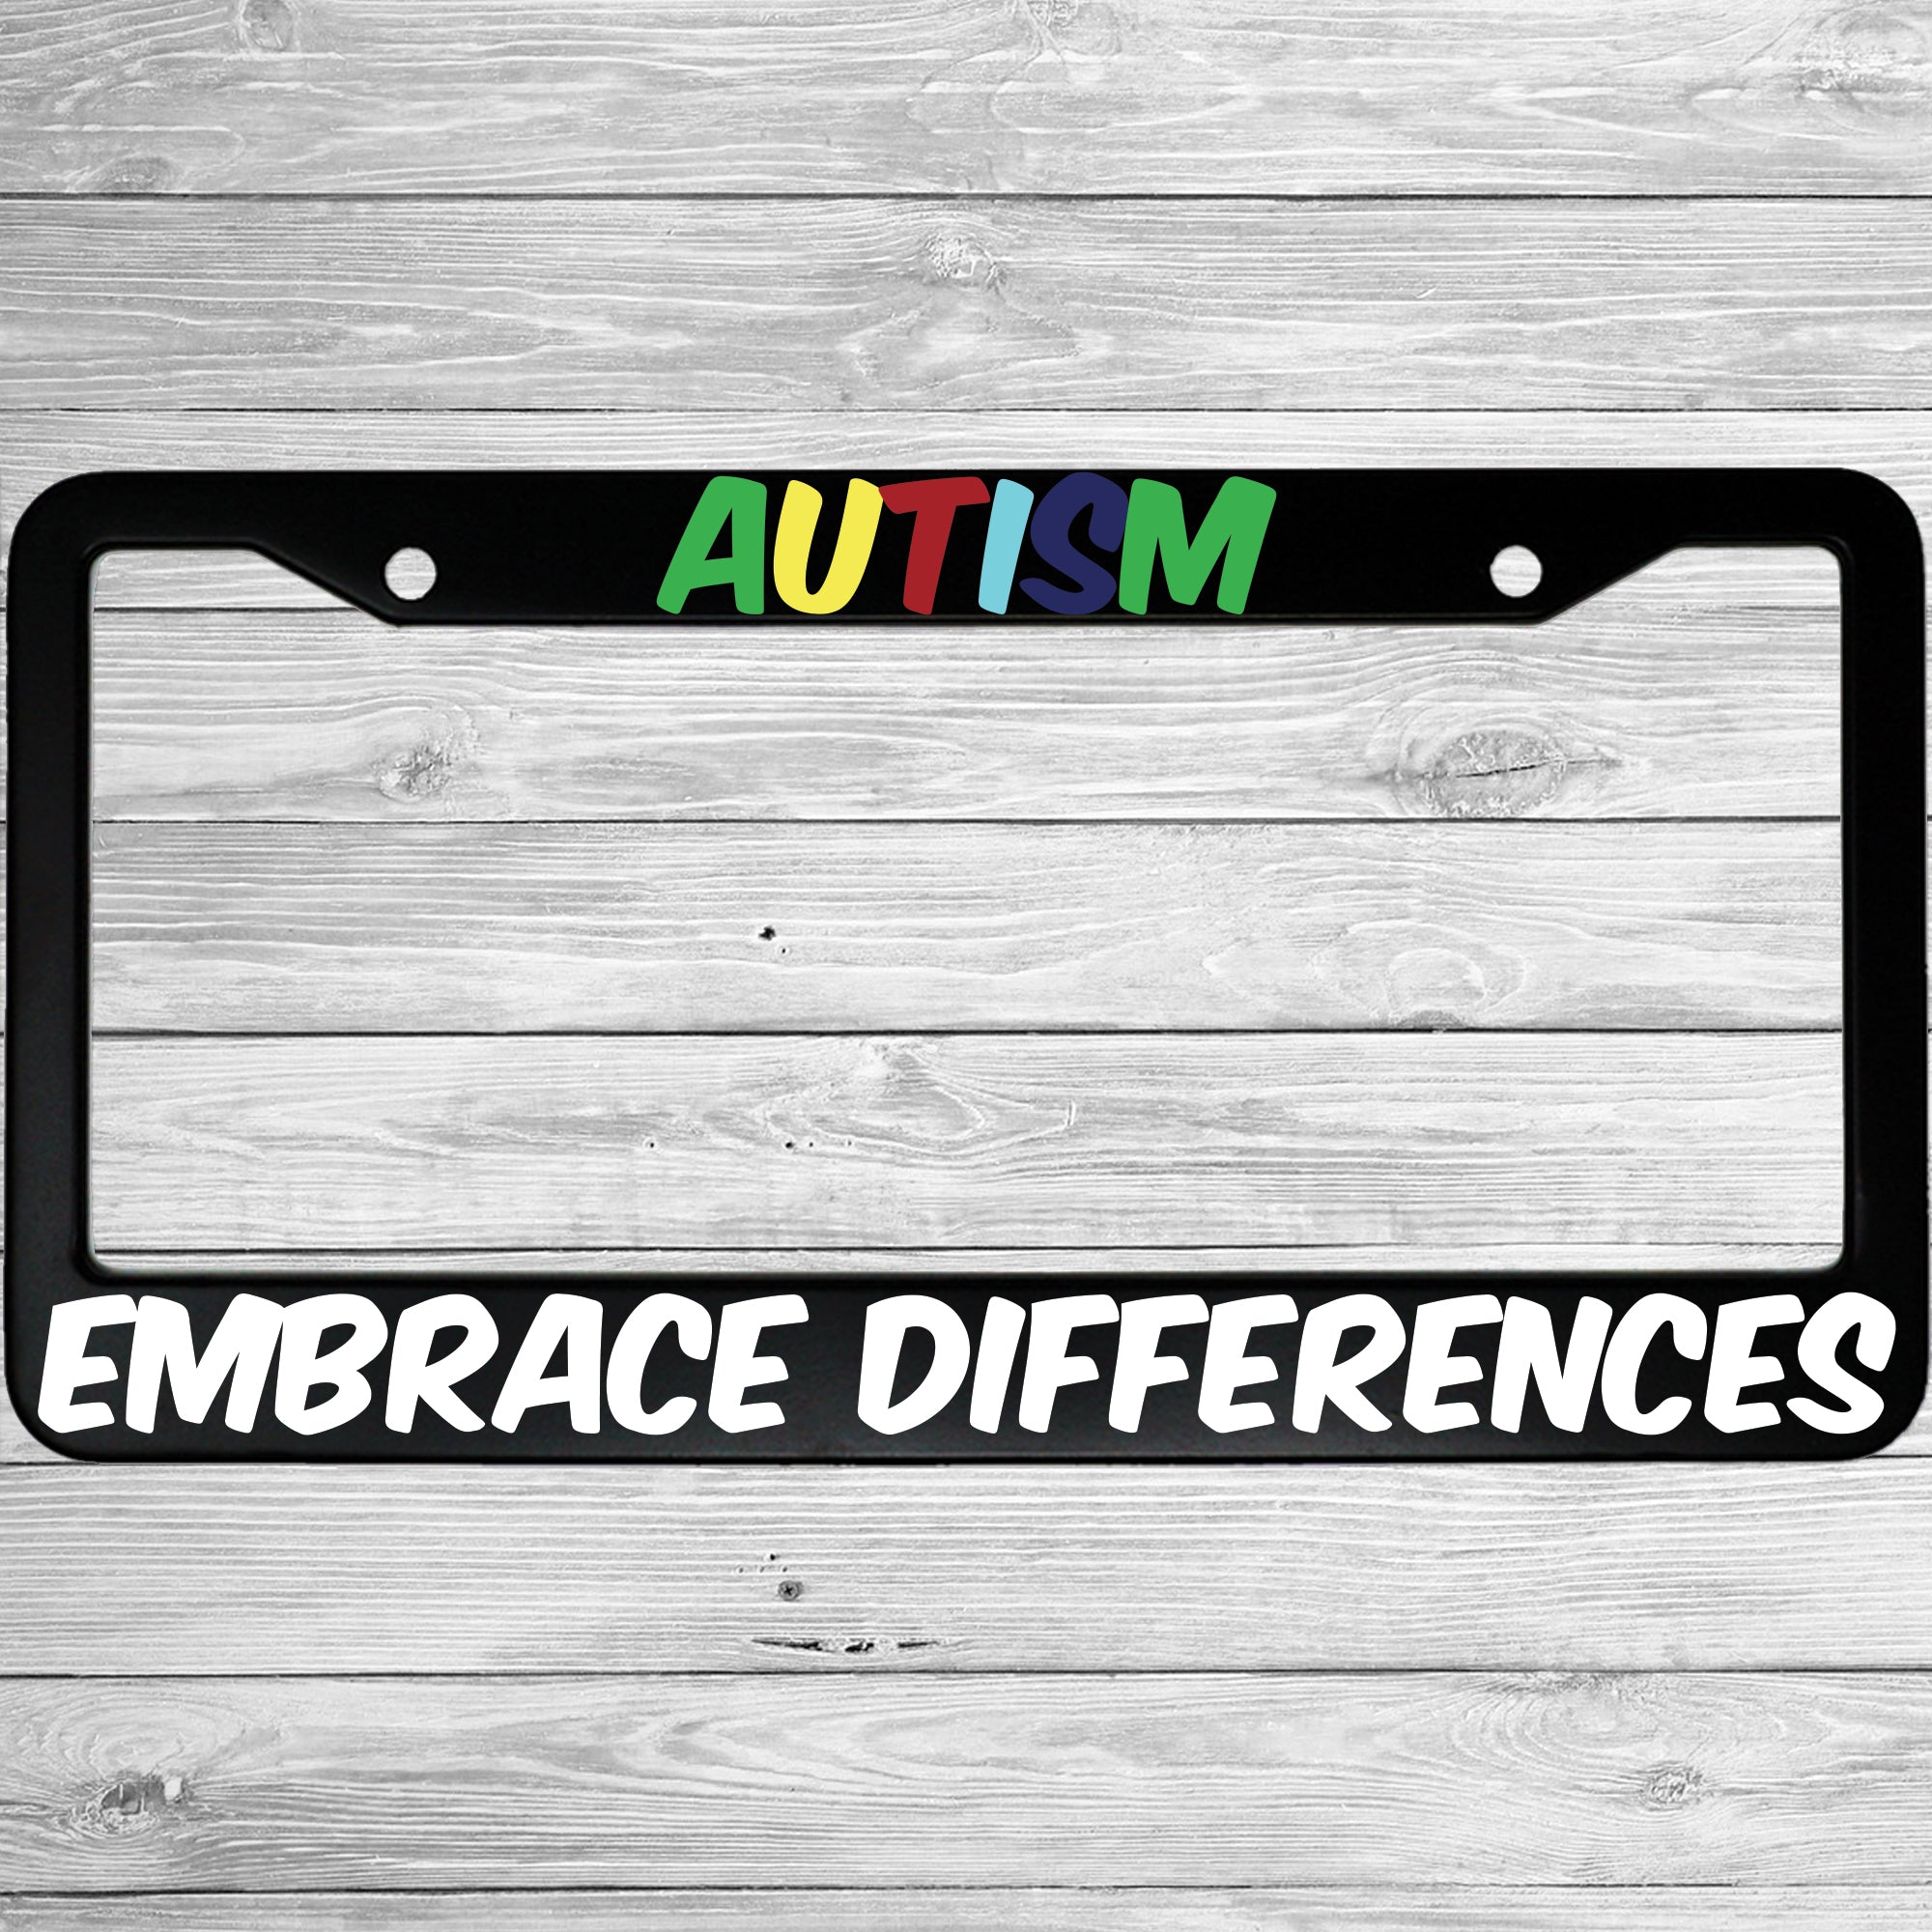 Autism Embrace Differences